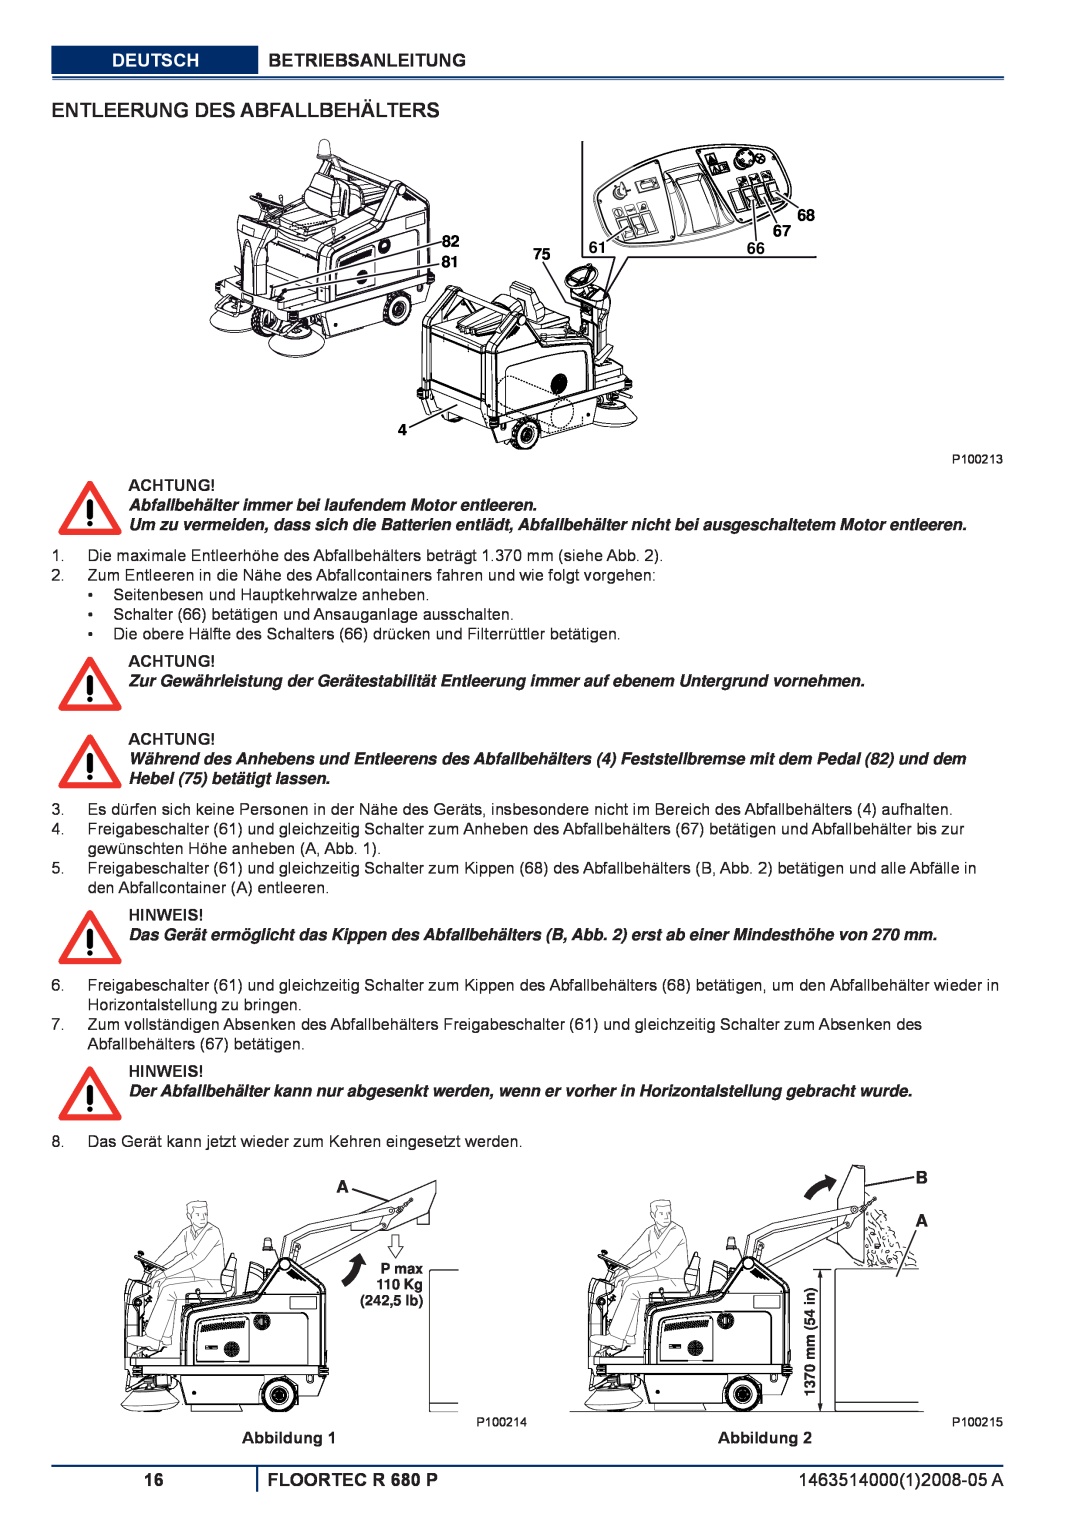 Nilfisk-ALTO Entleerung Des Abfallbehälters, Deutsch Betriebsanleitung, FLOORTEC R 680 P, Achtung, Hinweis, Abbildung 